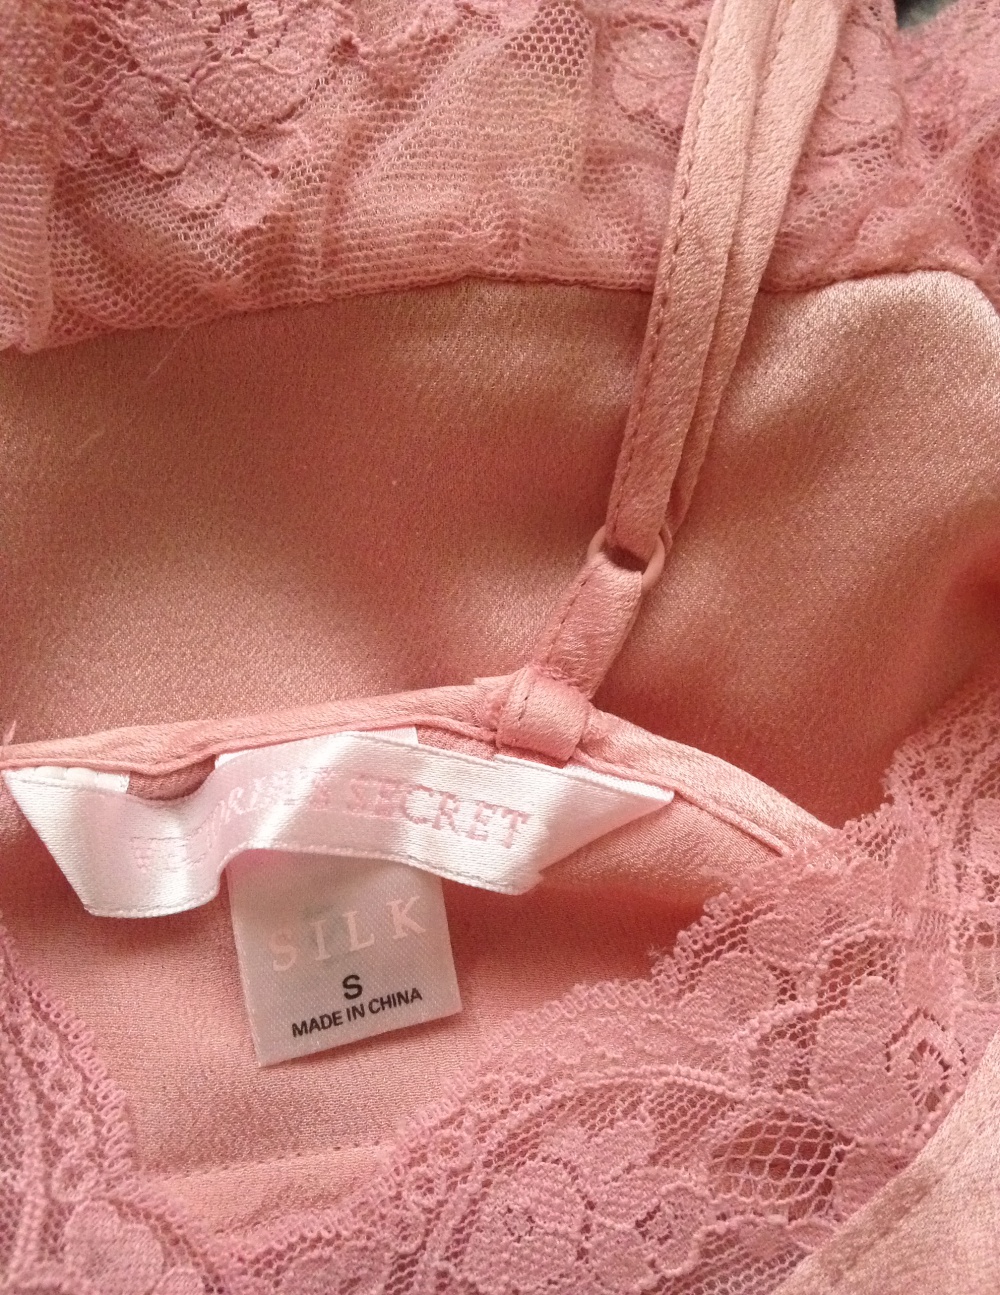 Victoria's Secret 100% Silk Baby Pink Babydoll Nightie Lace and Ruffles, комплект - топ-сорочка и стринги, размер S